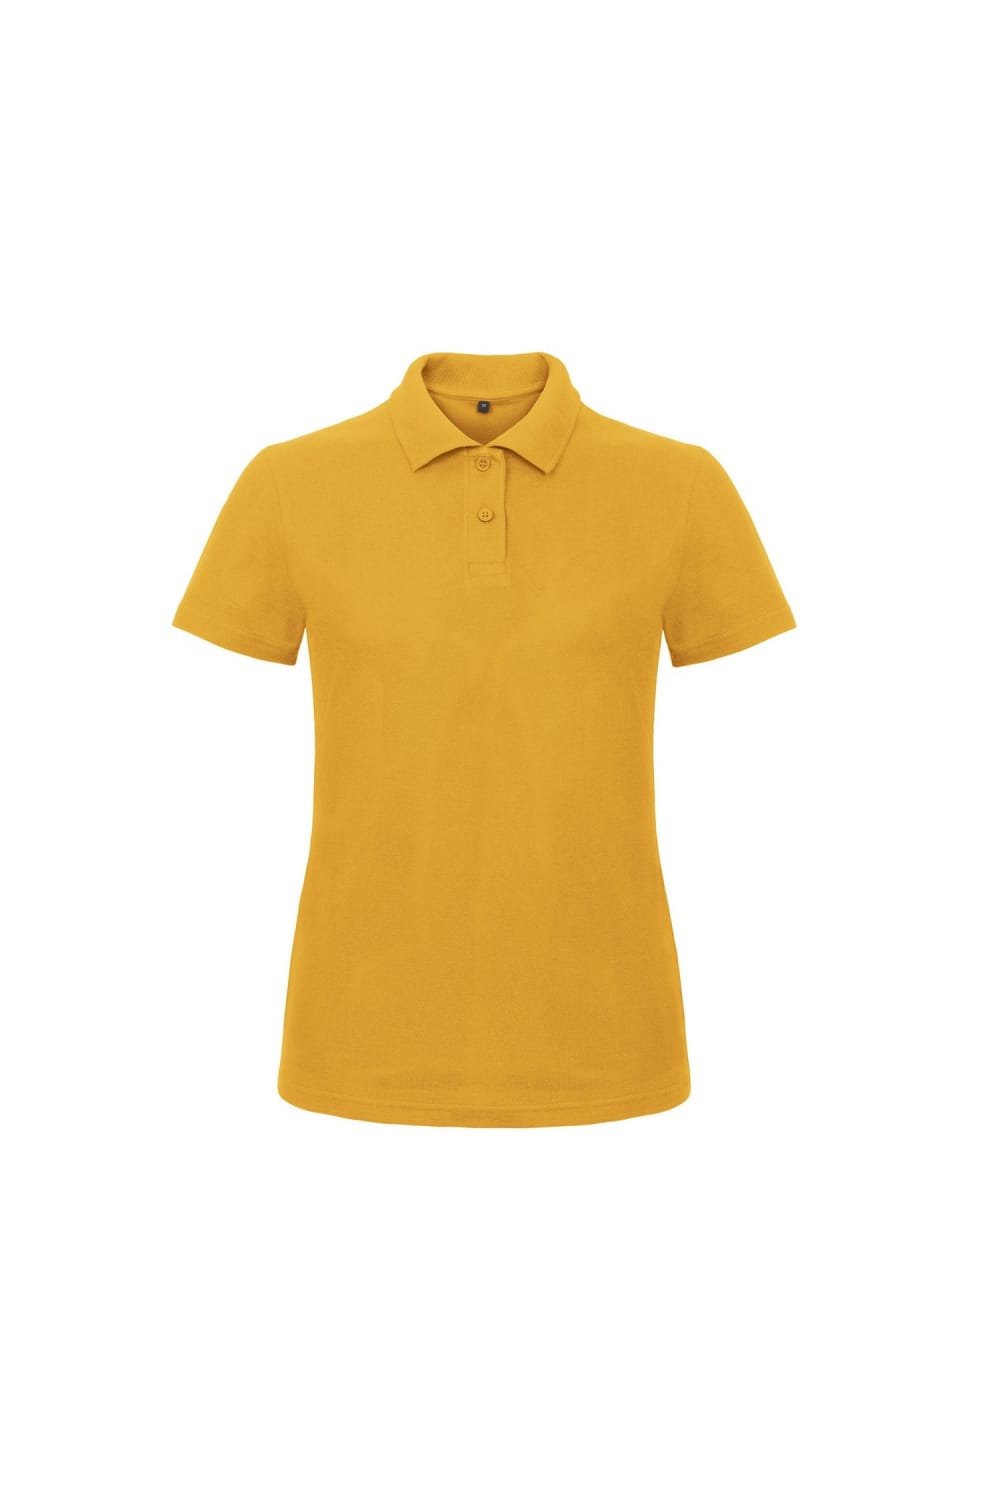 B&C Womens/Ladies ID.001 Plain Short Sleeve Polo Shirt (Chilli Gold)